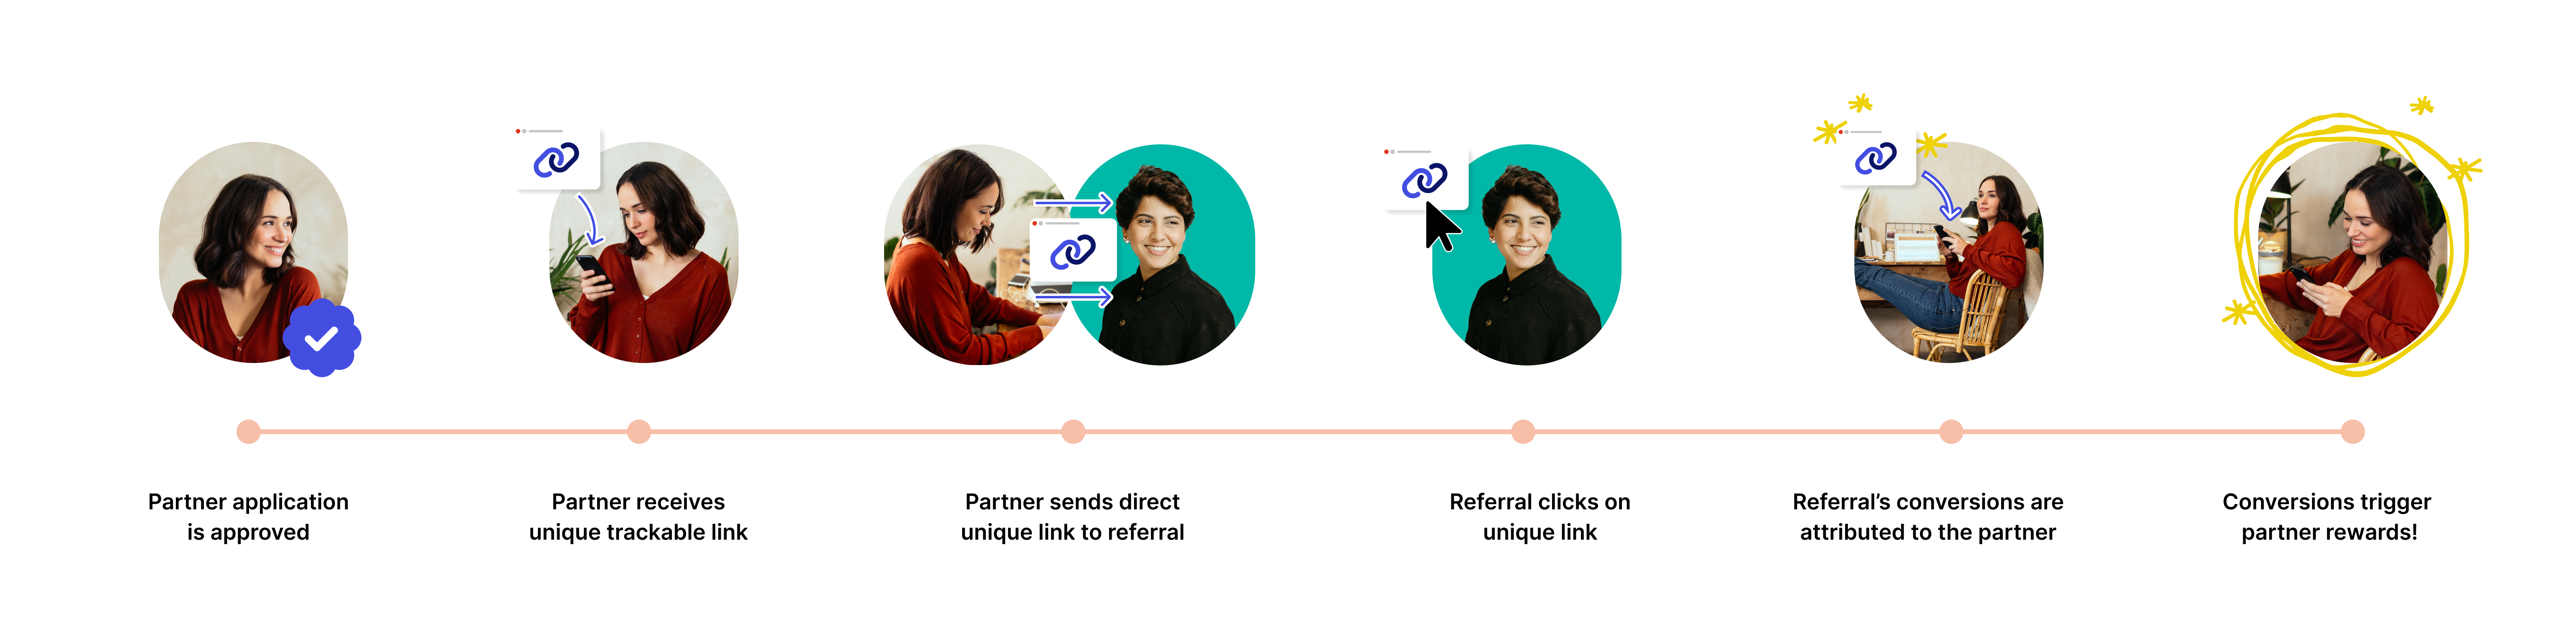 the steps in the lilnk-based referral partner integration process